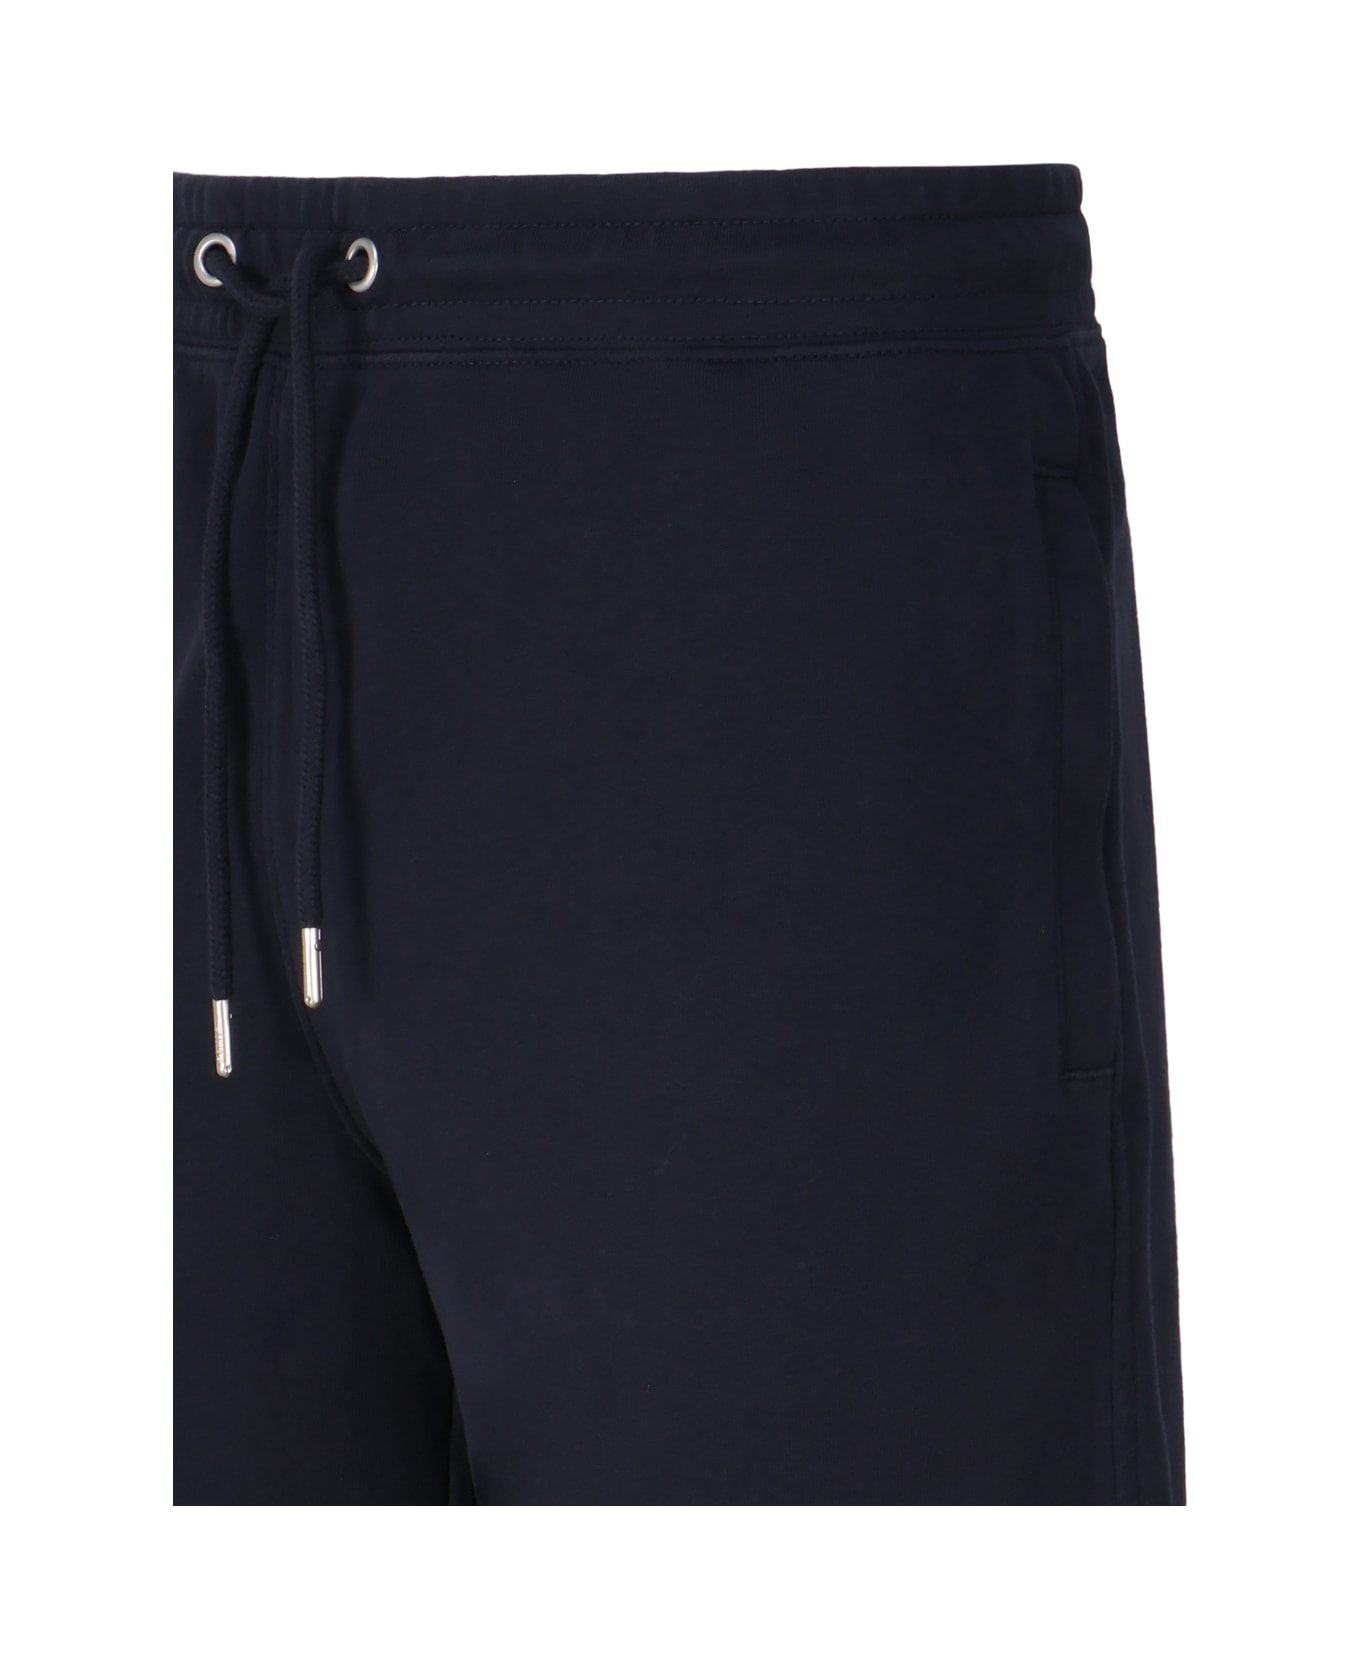 Sun 68 Cotton Blended Shorts - Navy blue ショートパンツ